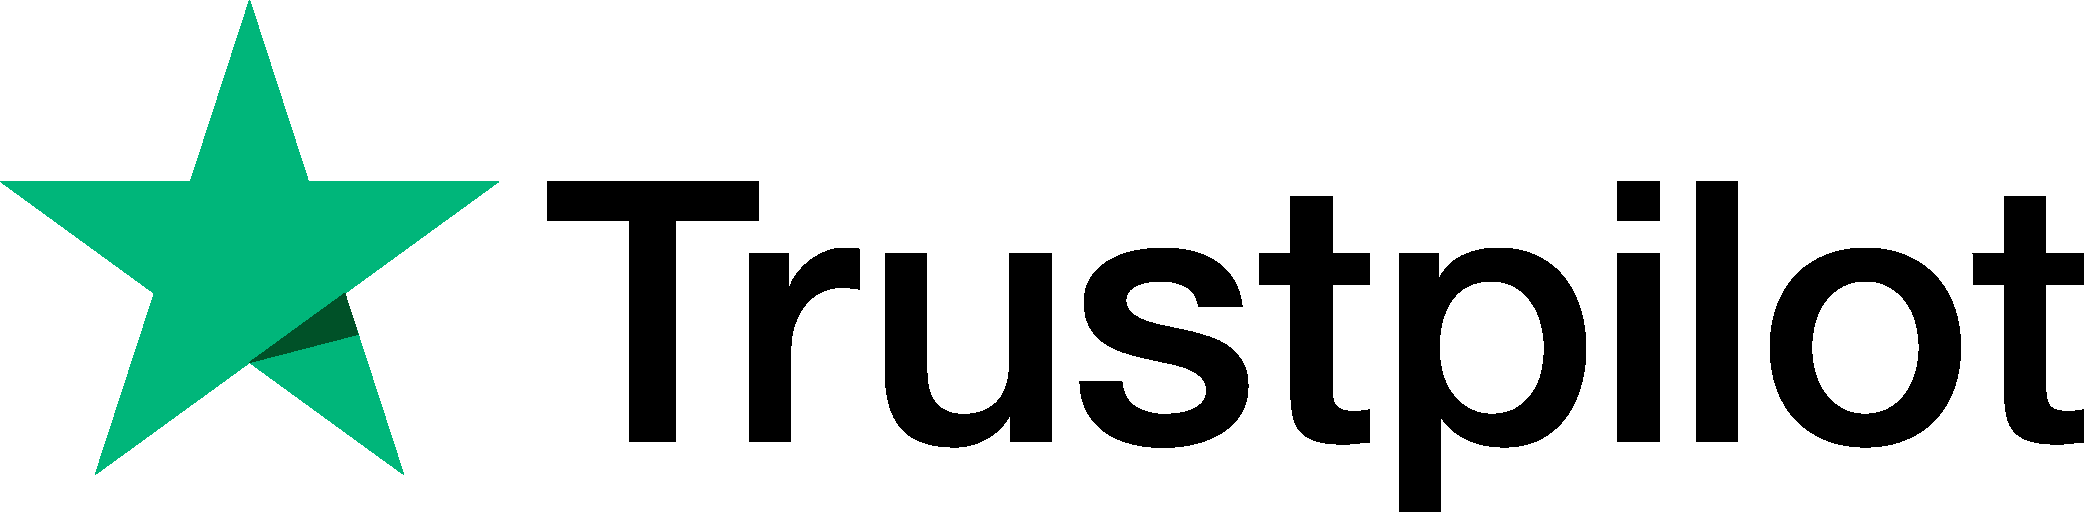  Review GriotSites on Trustpilot